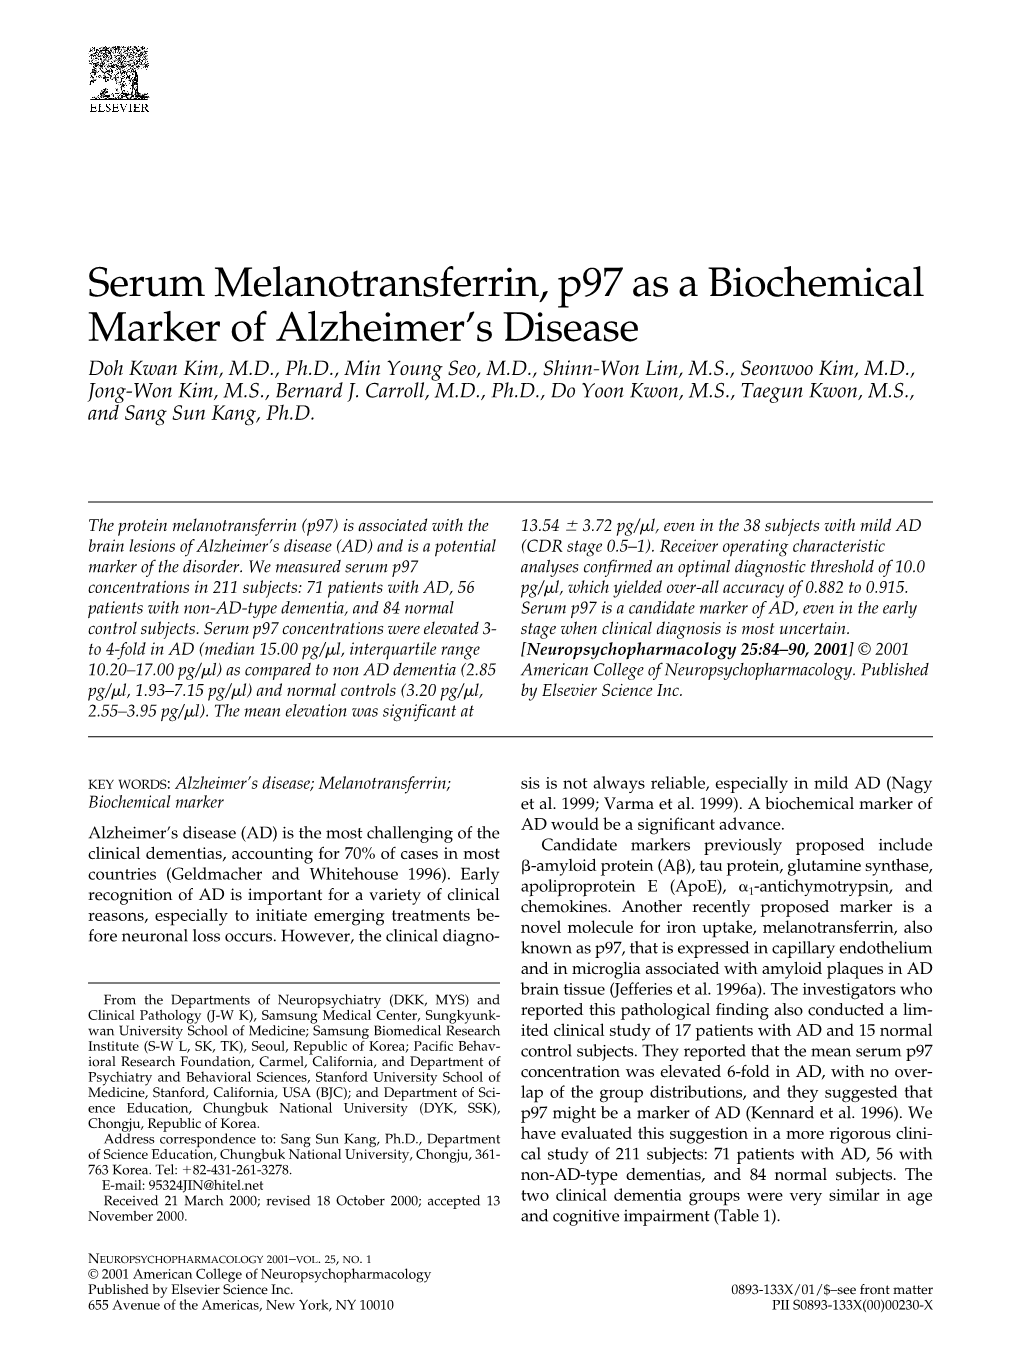 Serum Melanotransferrin, P97 As a Biochemical Marker of Alzheimer's